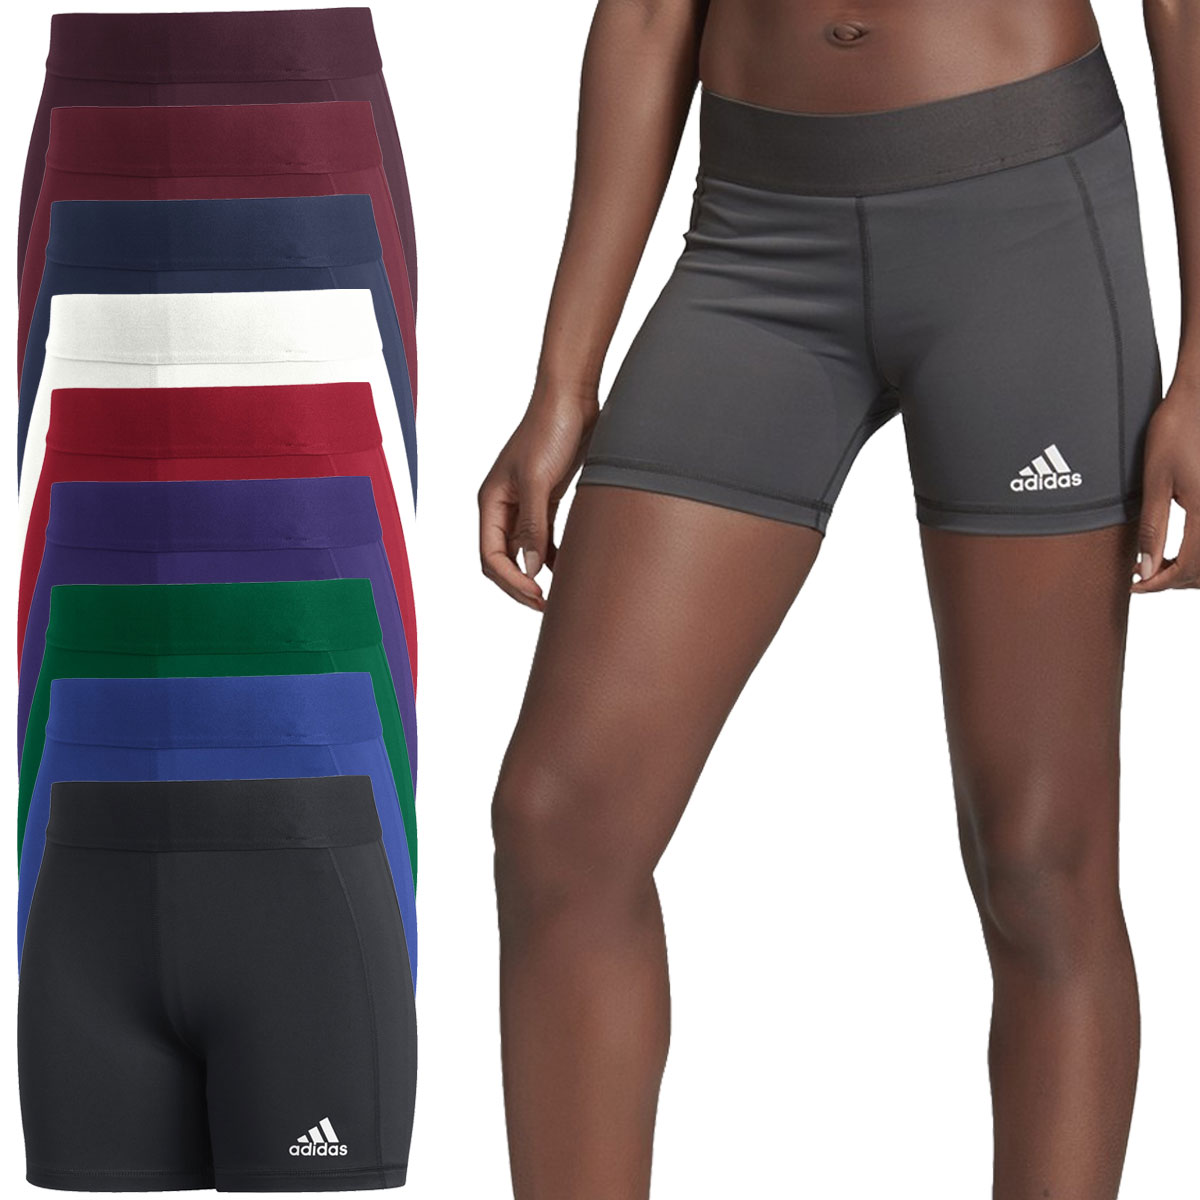 adidas Techfit Volleyball Shorts - Black | Women's Volleyball | adidas US